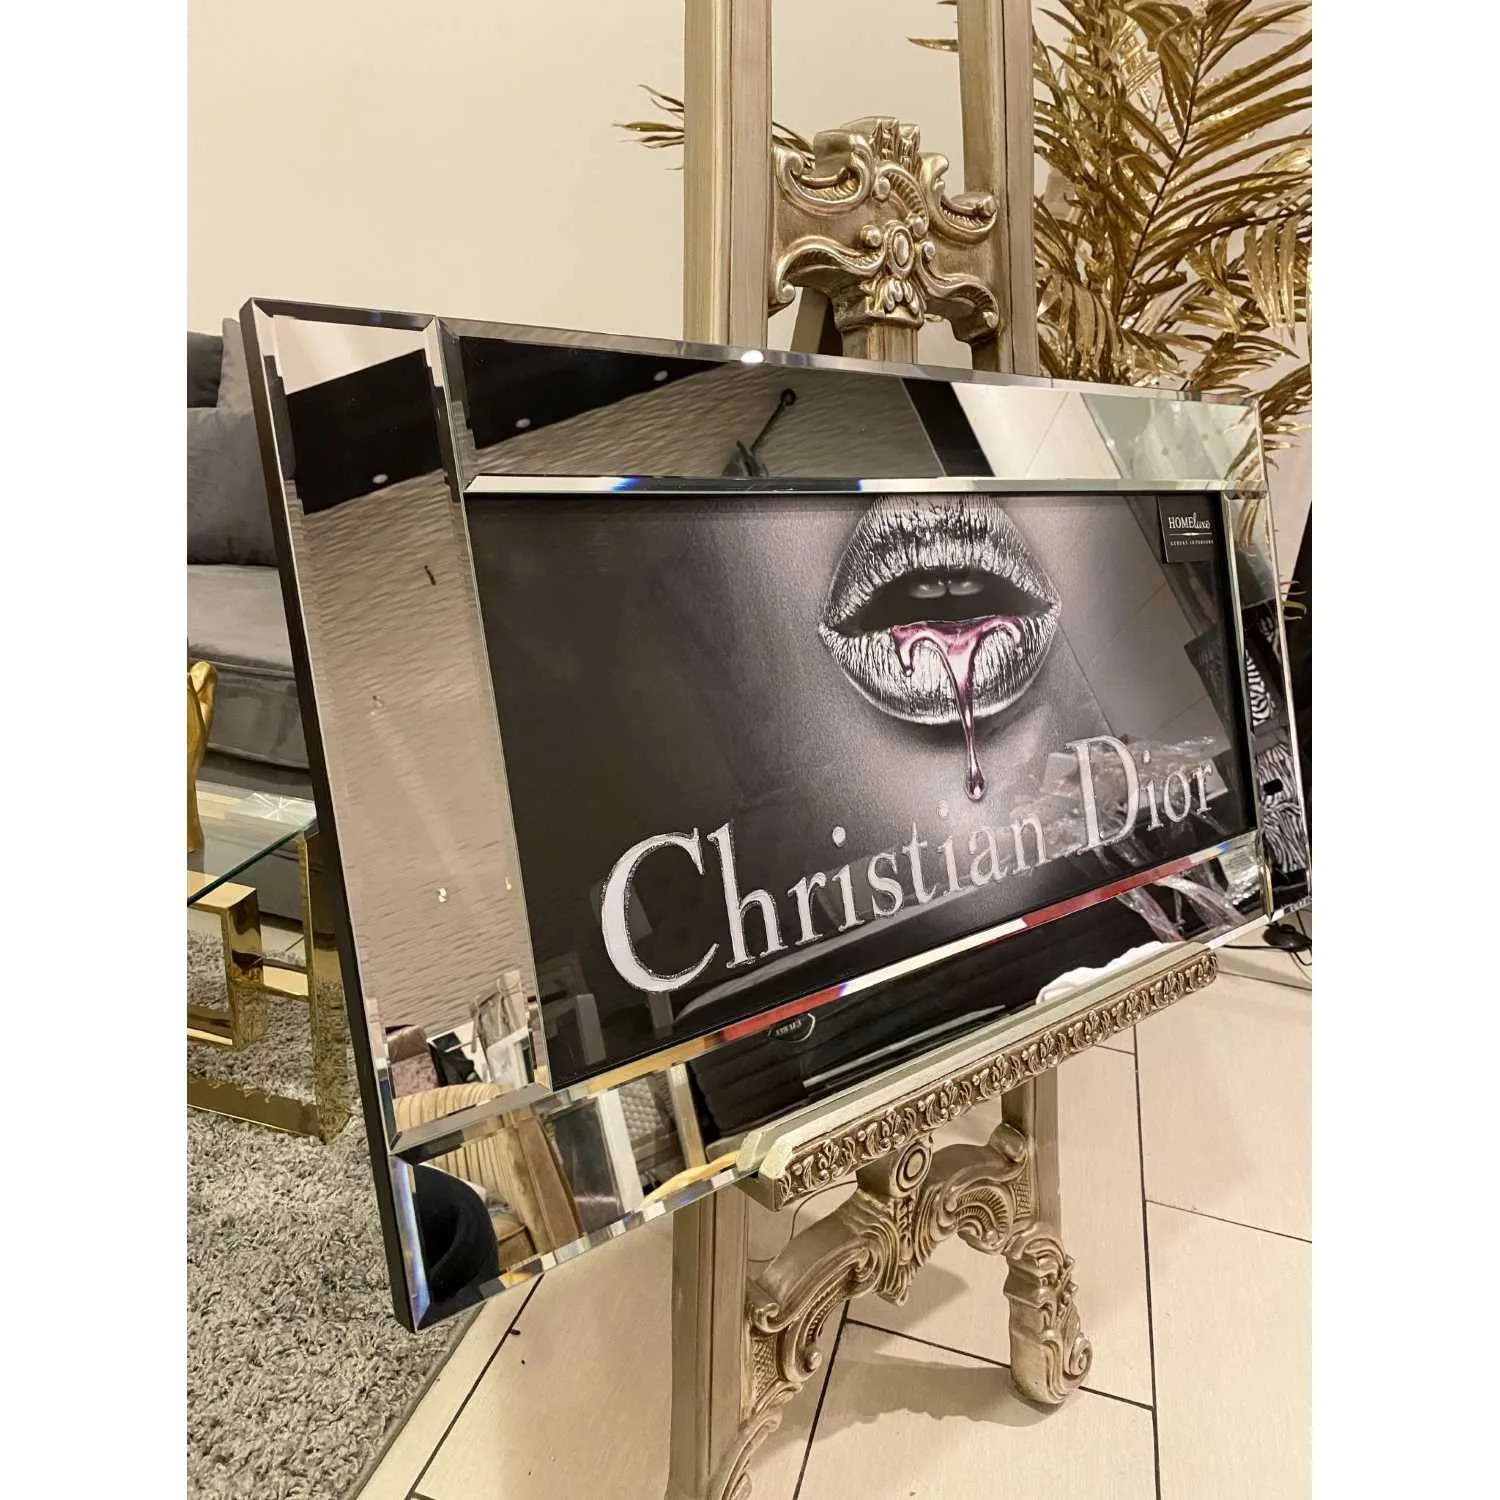 Media Art louis Vuitton Lips Mirror Framed sparkle Art 85cm x 85cm